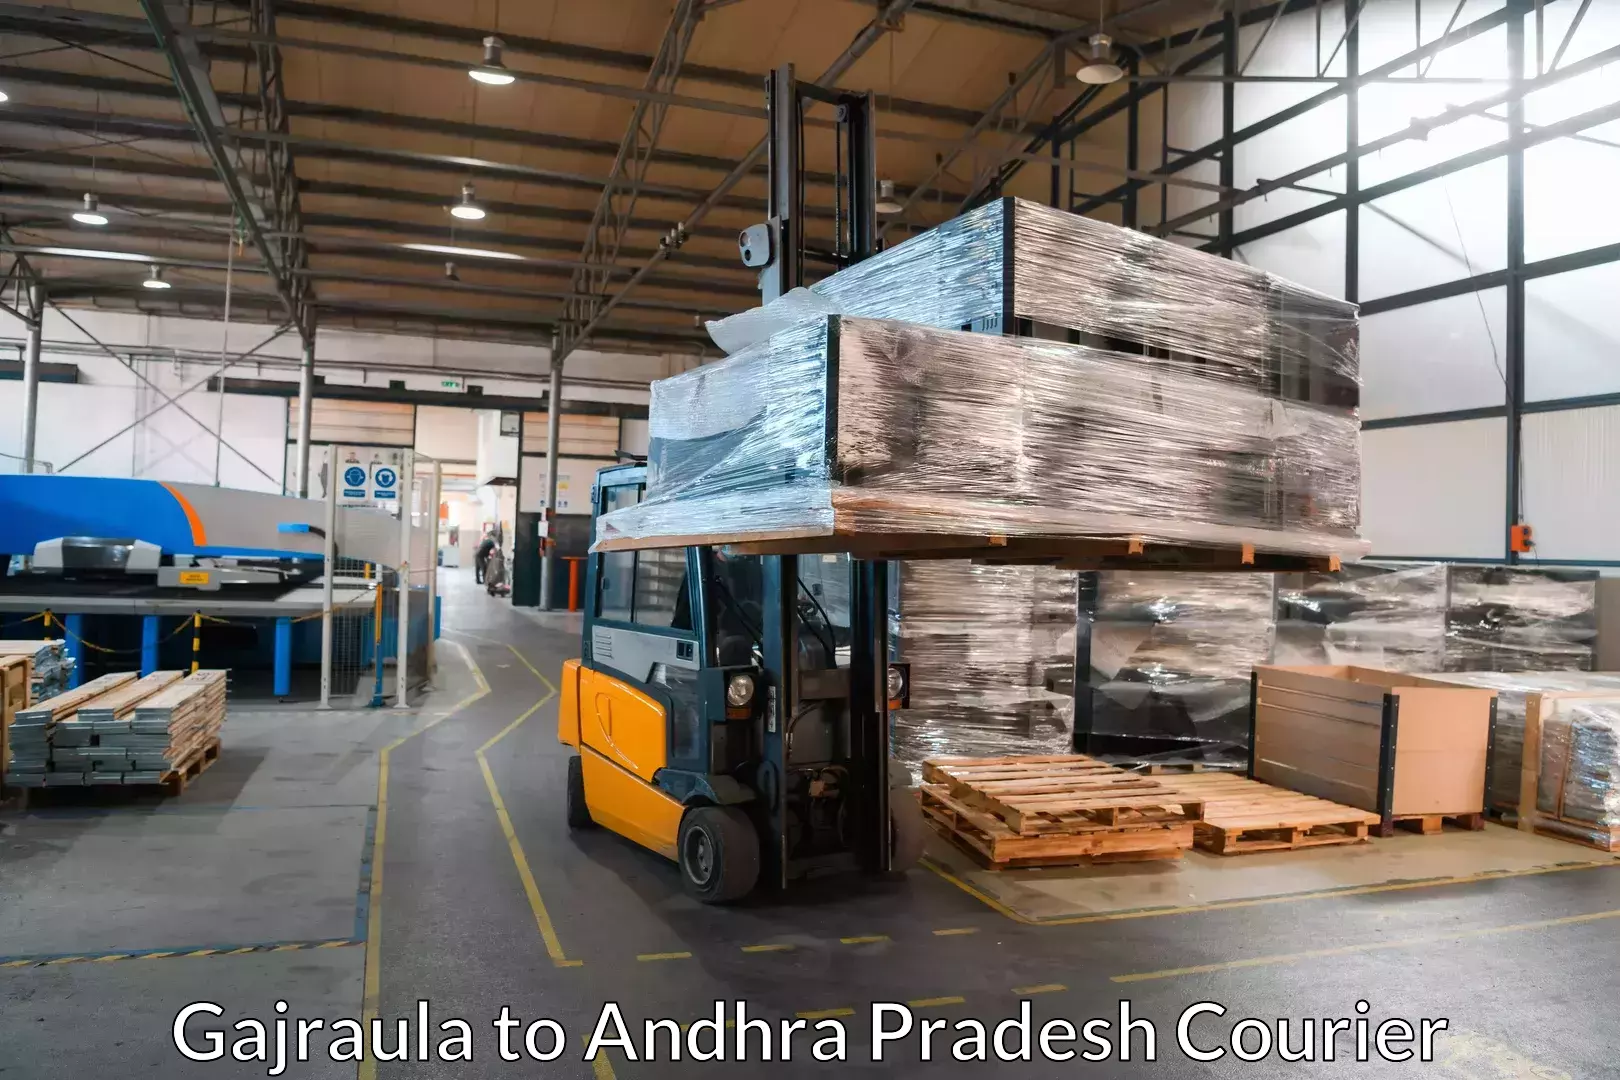 Furniture delivery service Gajraula to Guntur